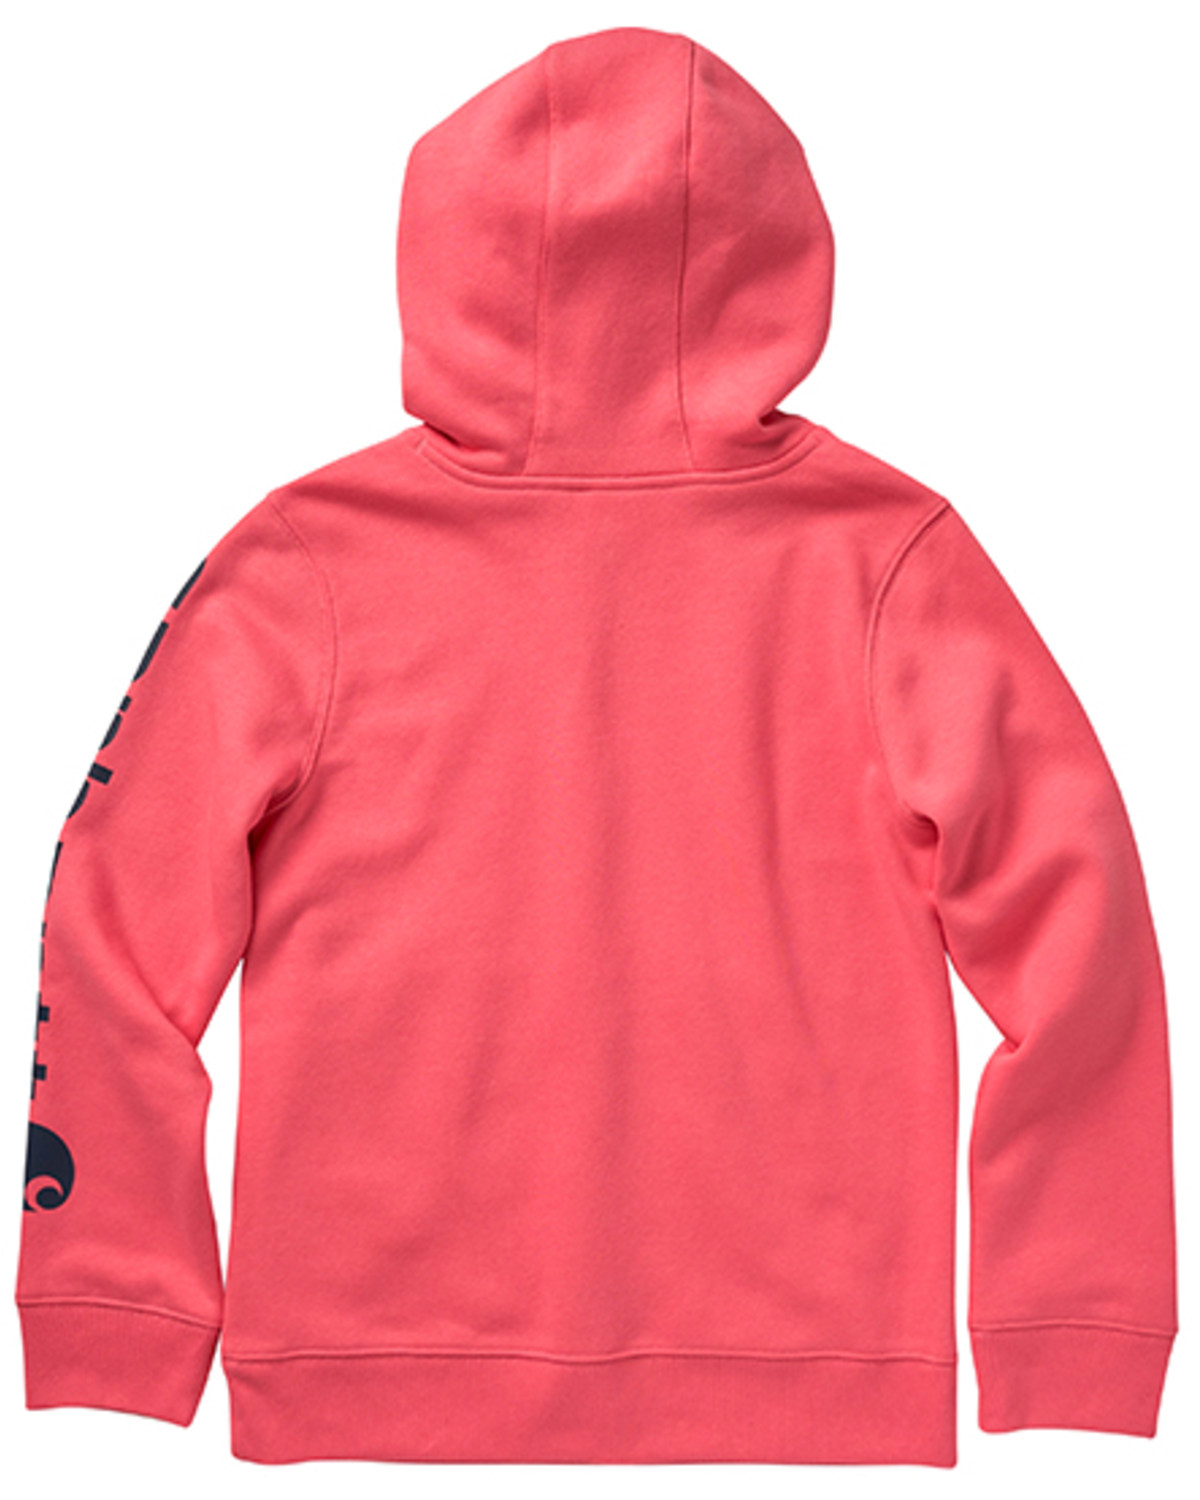 Carhartt Girls' Logo Graphic Long Sleeve Sweatshirt Hoodie - Sizes 4-6 ...